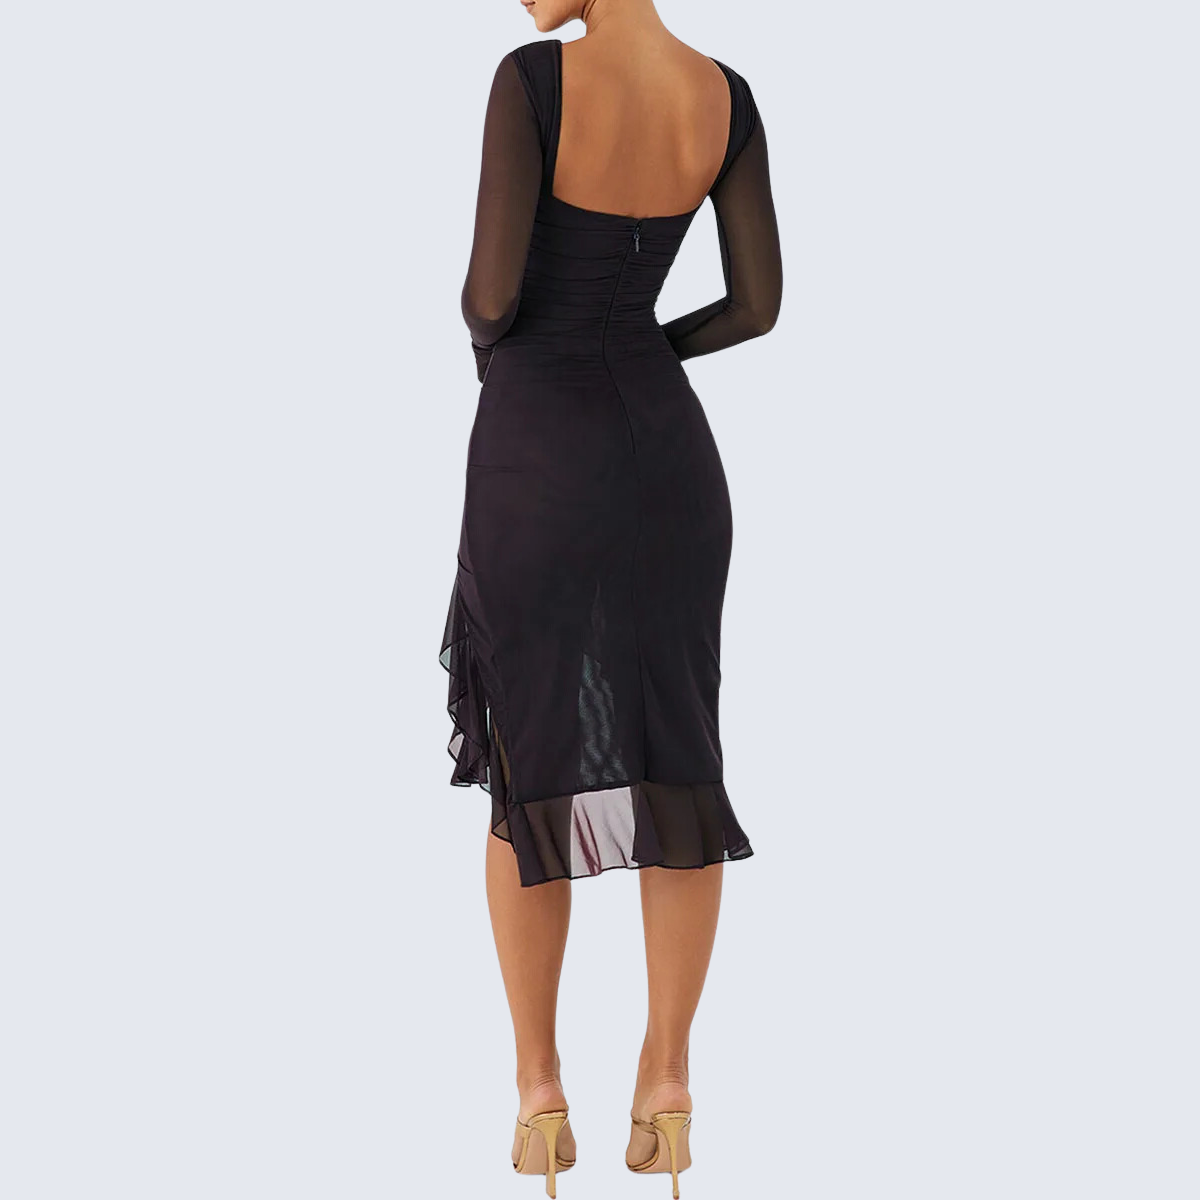 Black Long Sleeve Backless Ruffle Midi Dress